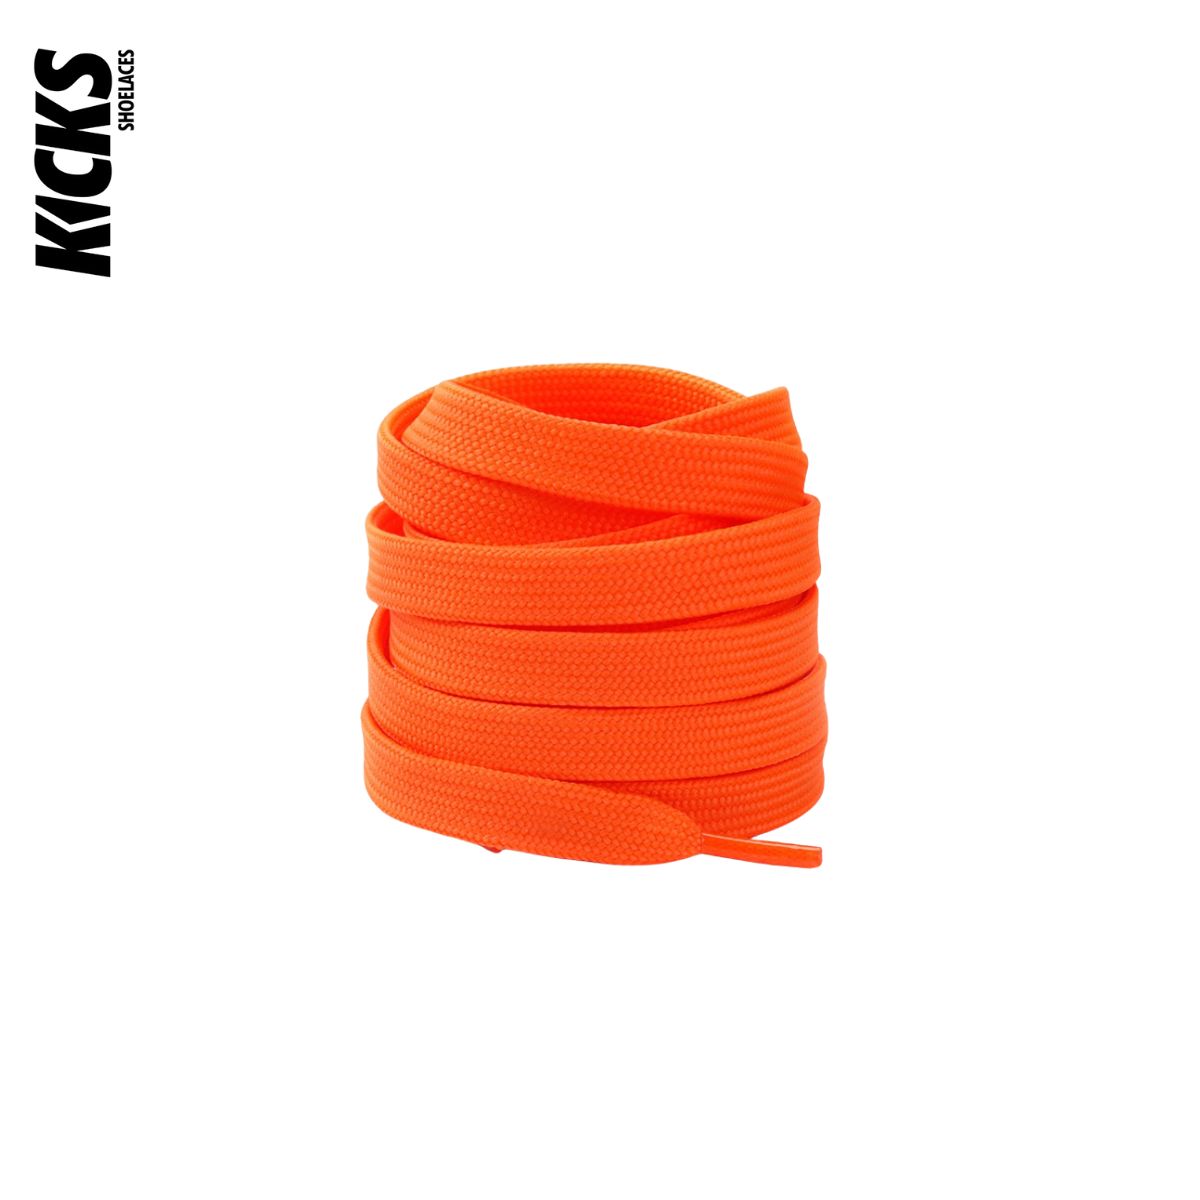 Orange Nike Dunks Shoelace Replacements - Kicks Shoelaces